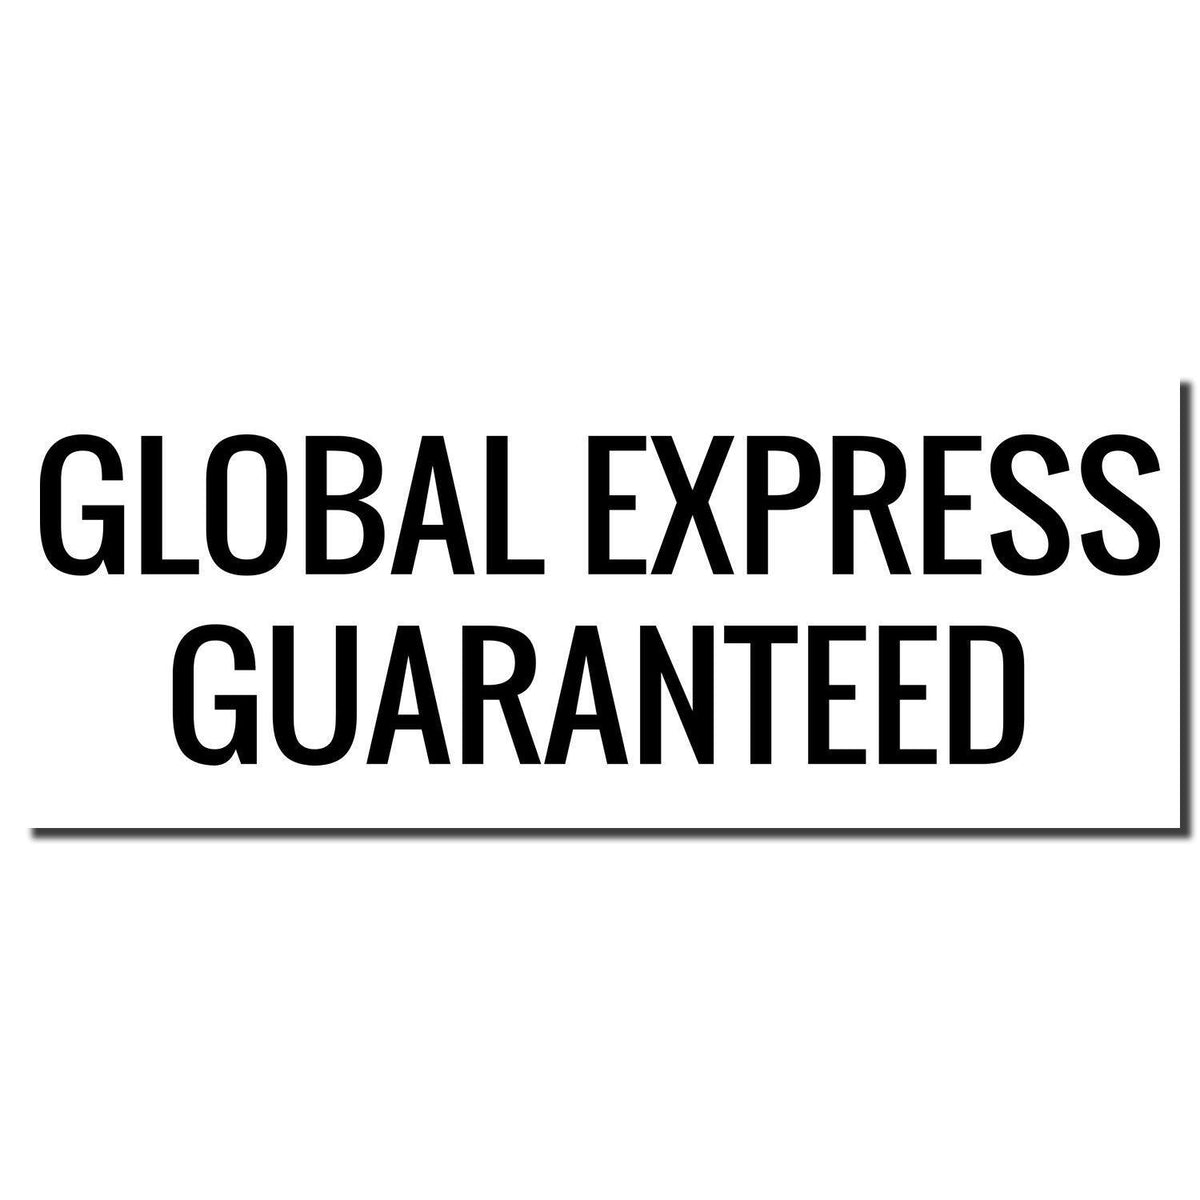 Enlarged Imprint Large Global Express Guaranteed Rubber Stamp Sample